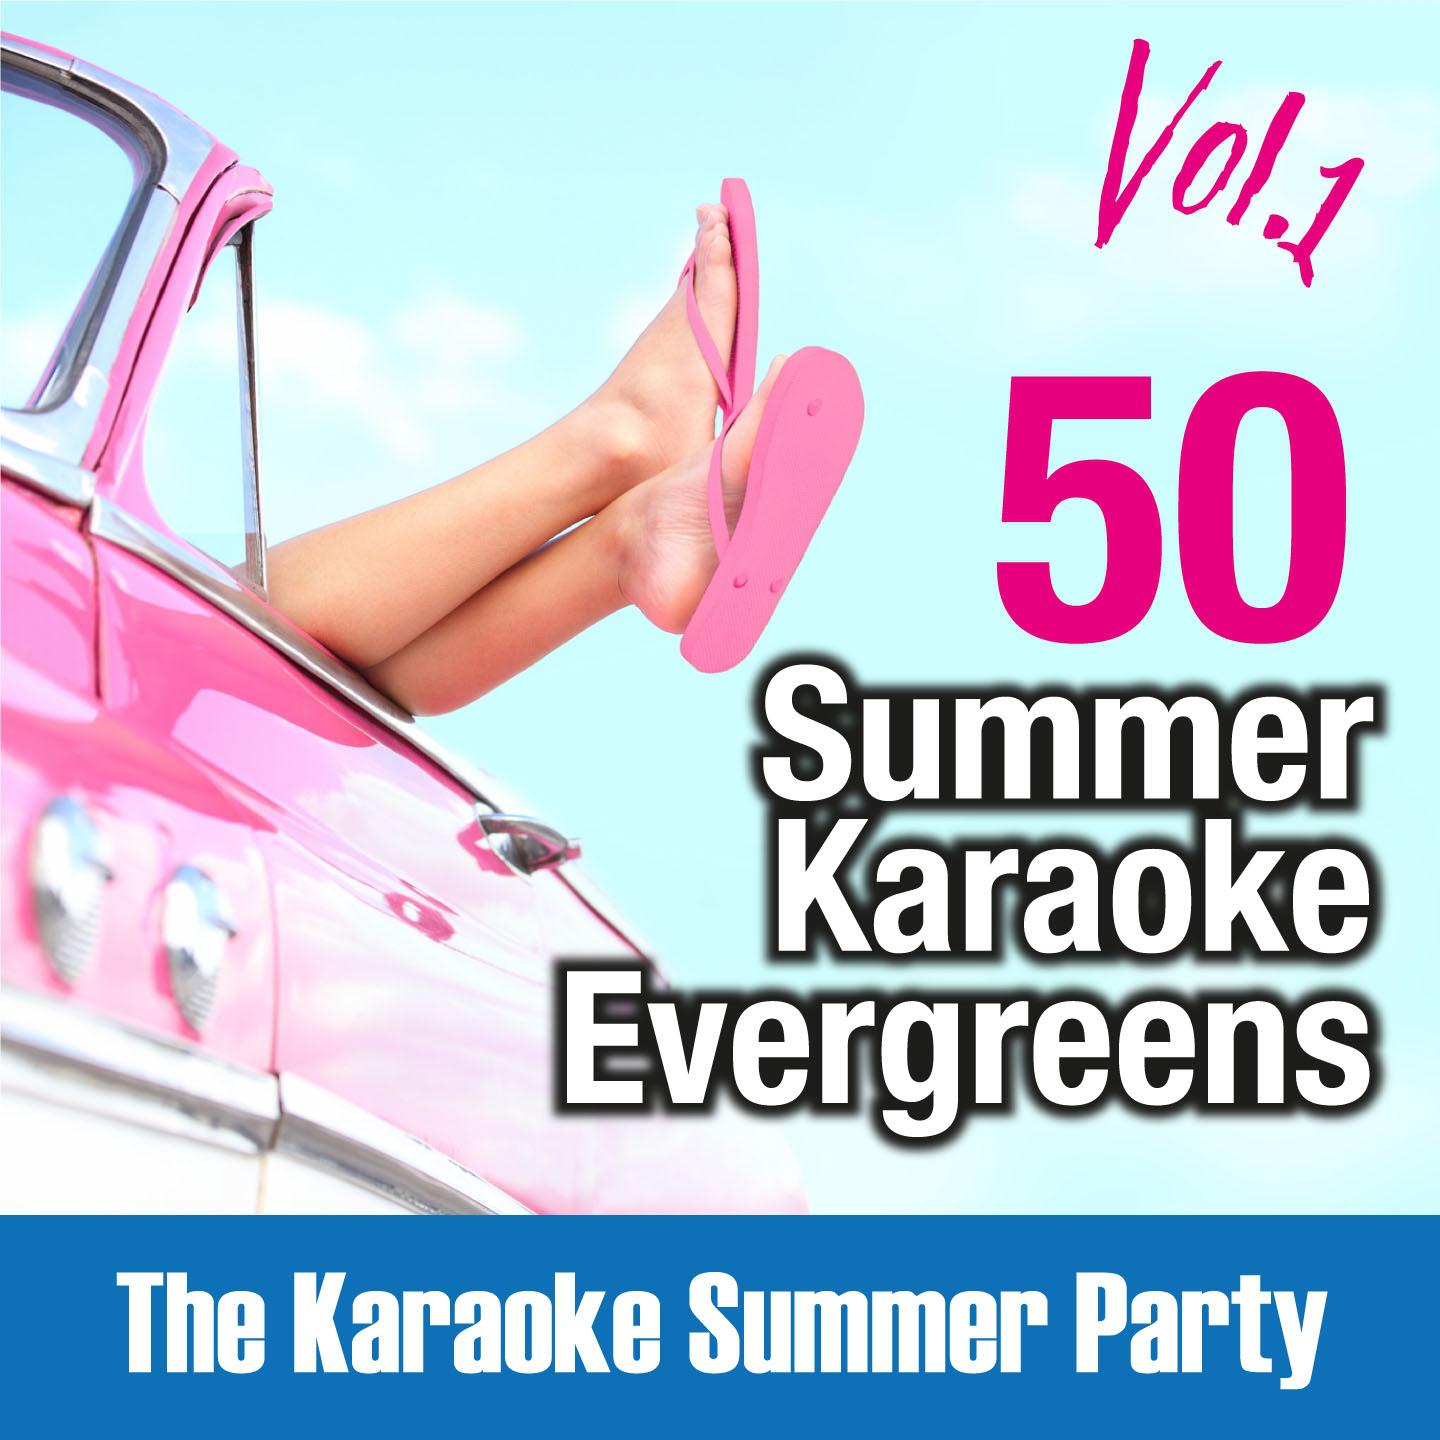 50 Summer Karaoke Evergreens, Vol. 1 (The Karaoke Summer Party)